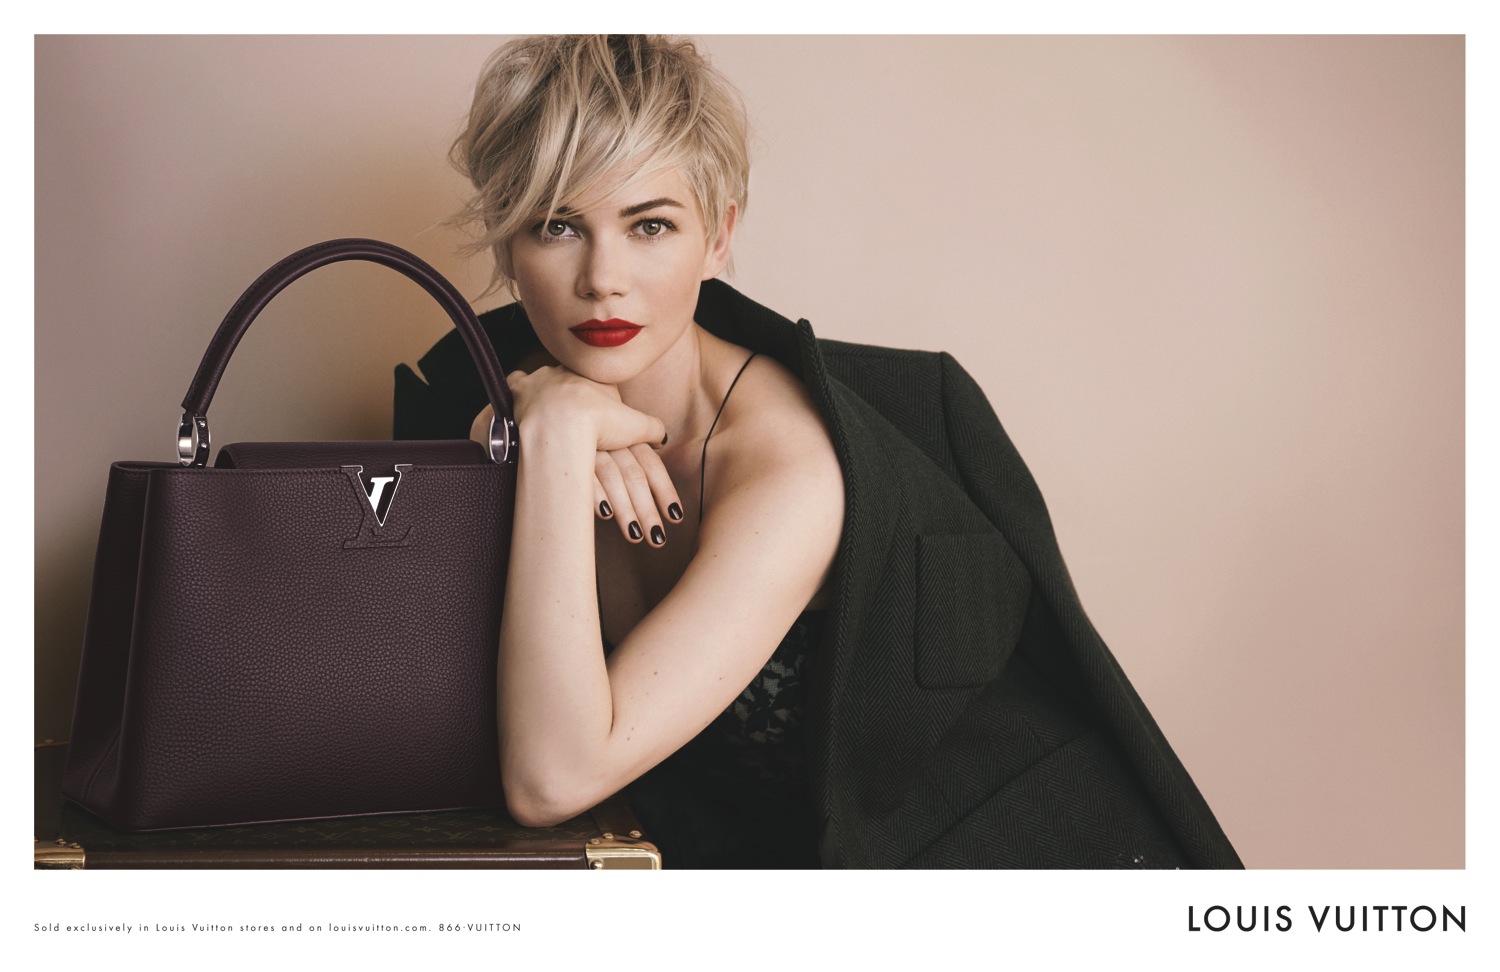 Louis Vuitton Ads Michelle Williams